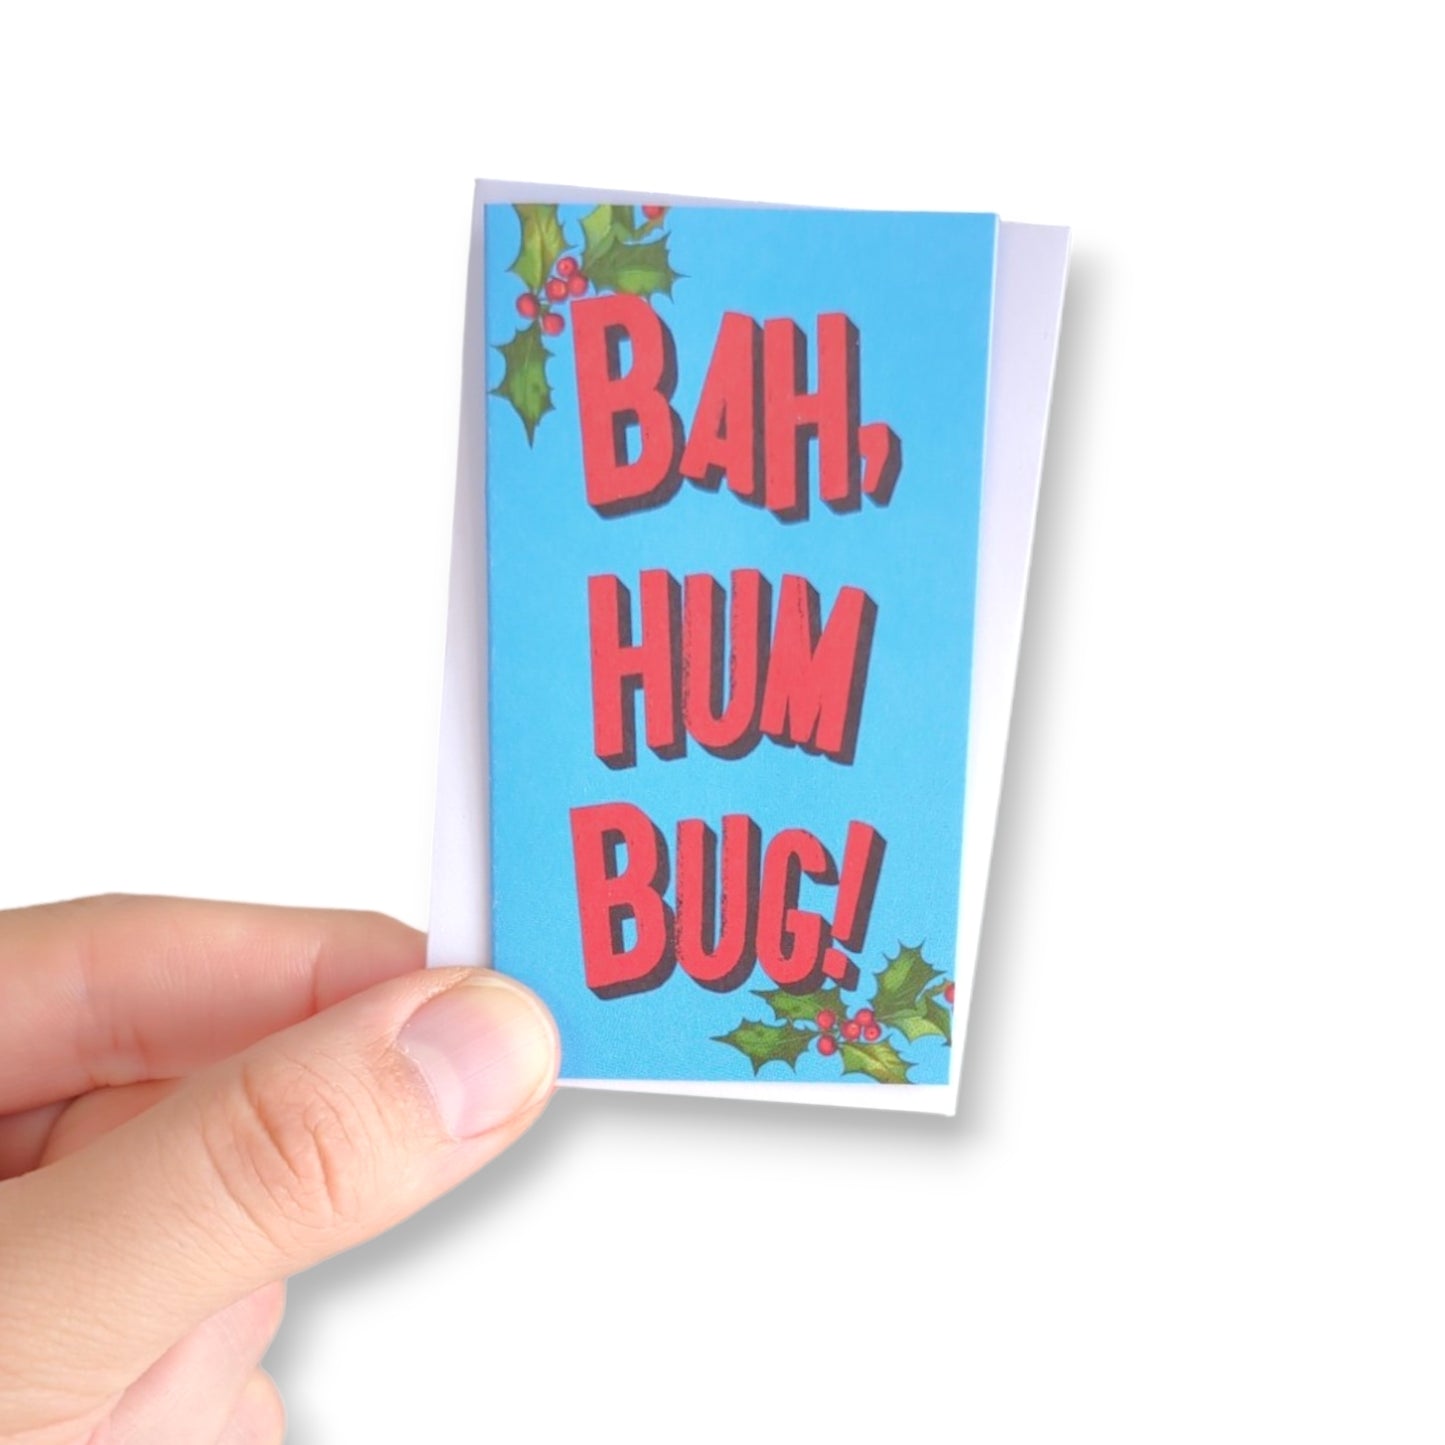 A Bah Hum Bug Holiday